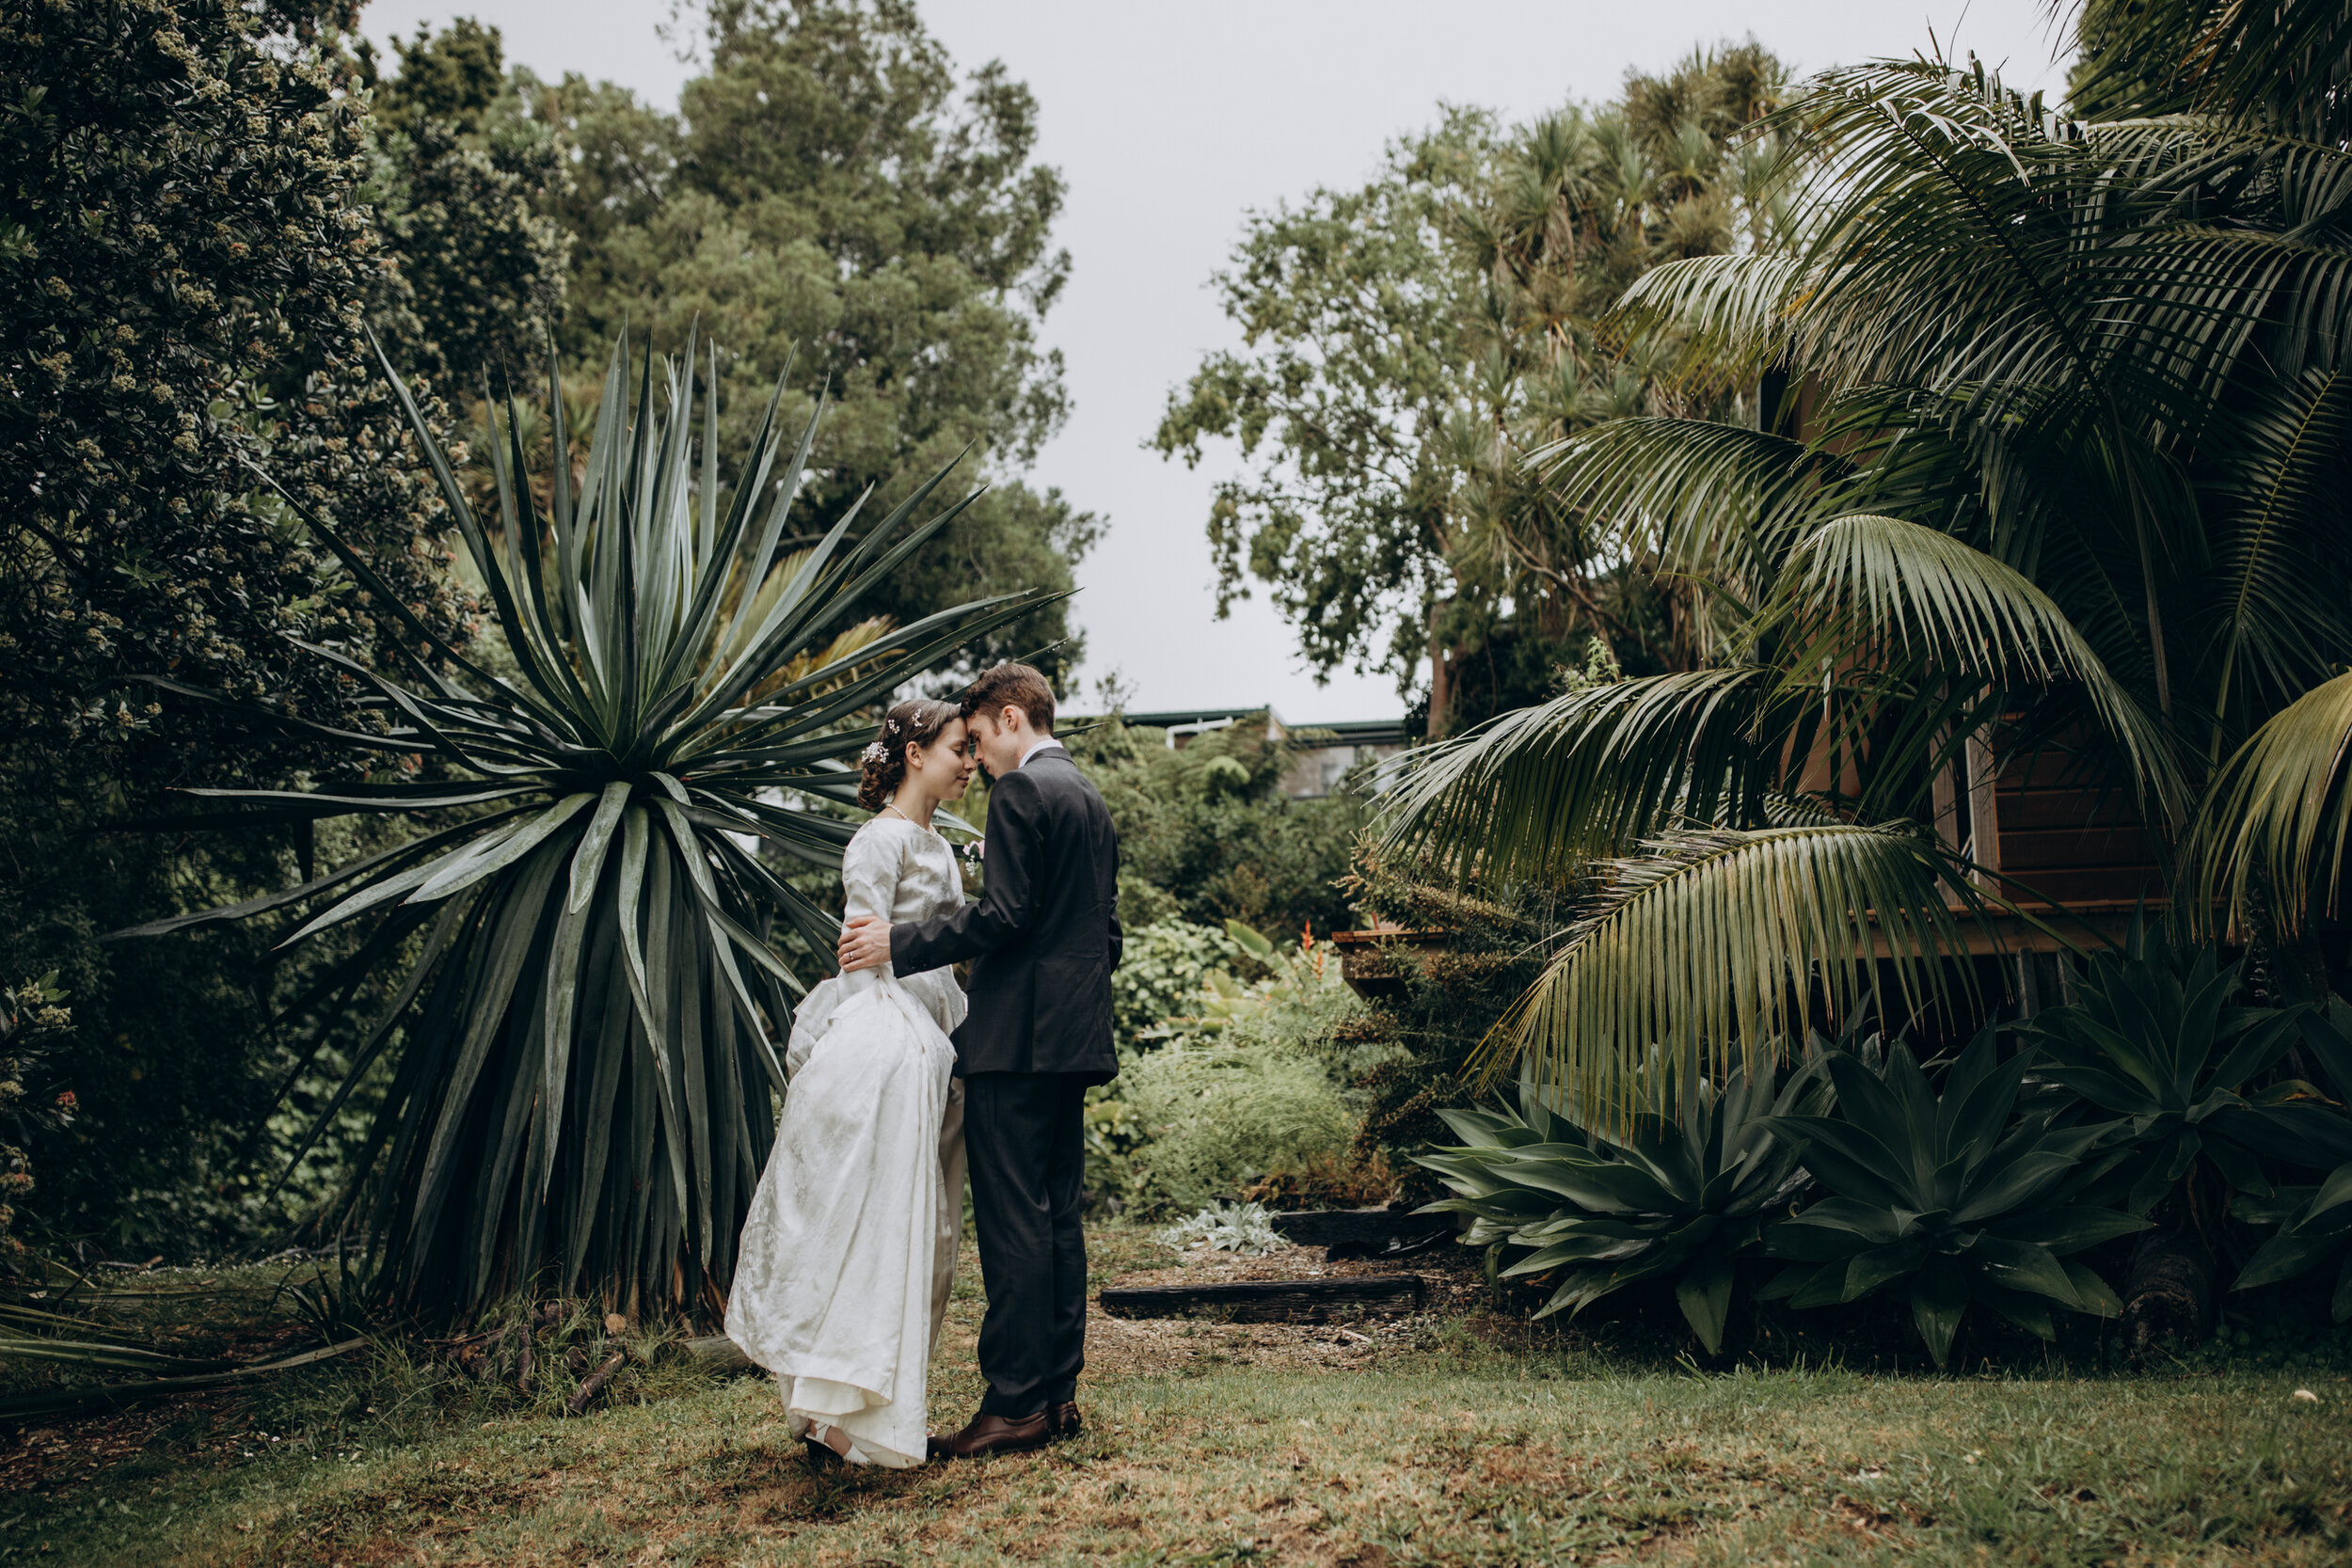 Eden Community church | Christian wedding | Auckland wedding photographer | New Zealand wedding photographer | Rainy day weather 